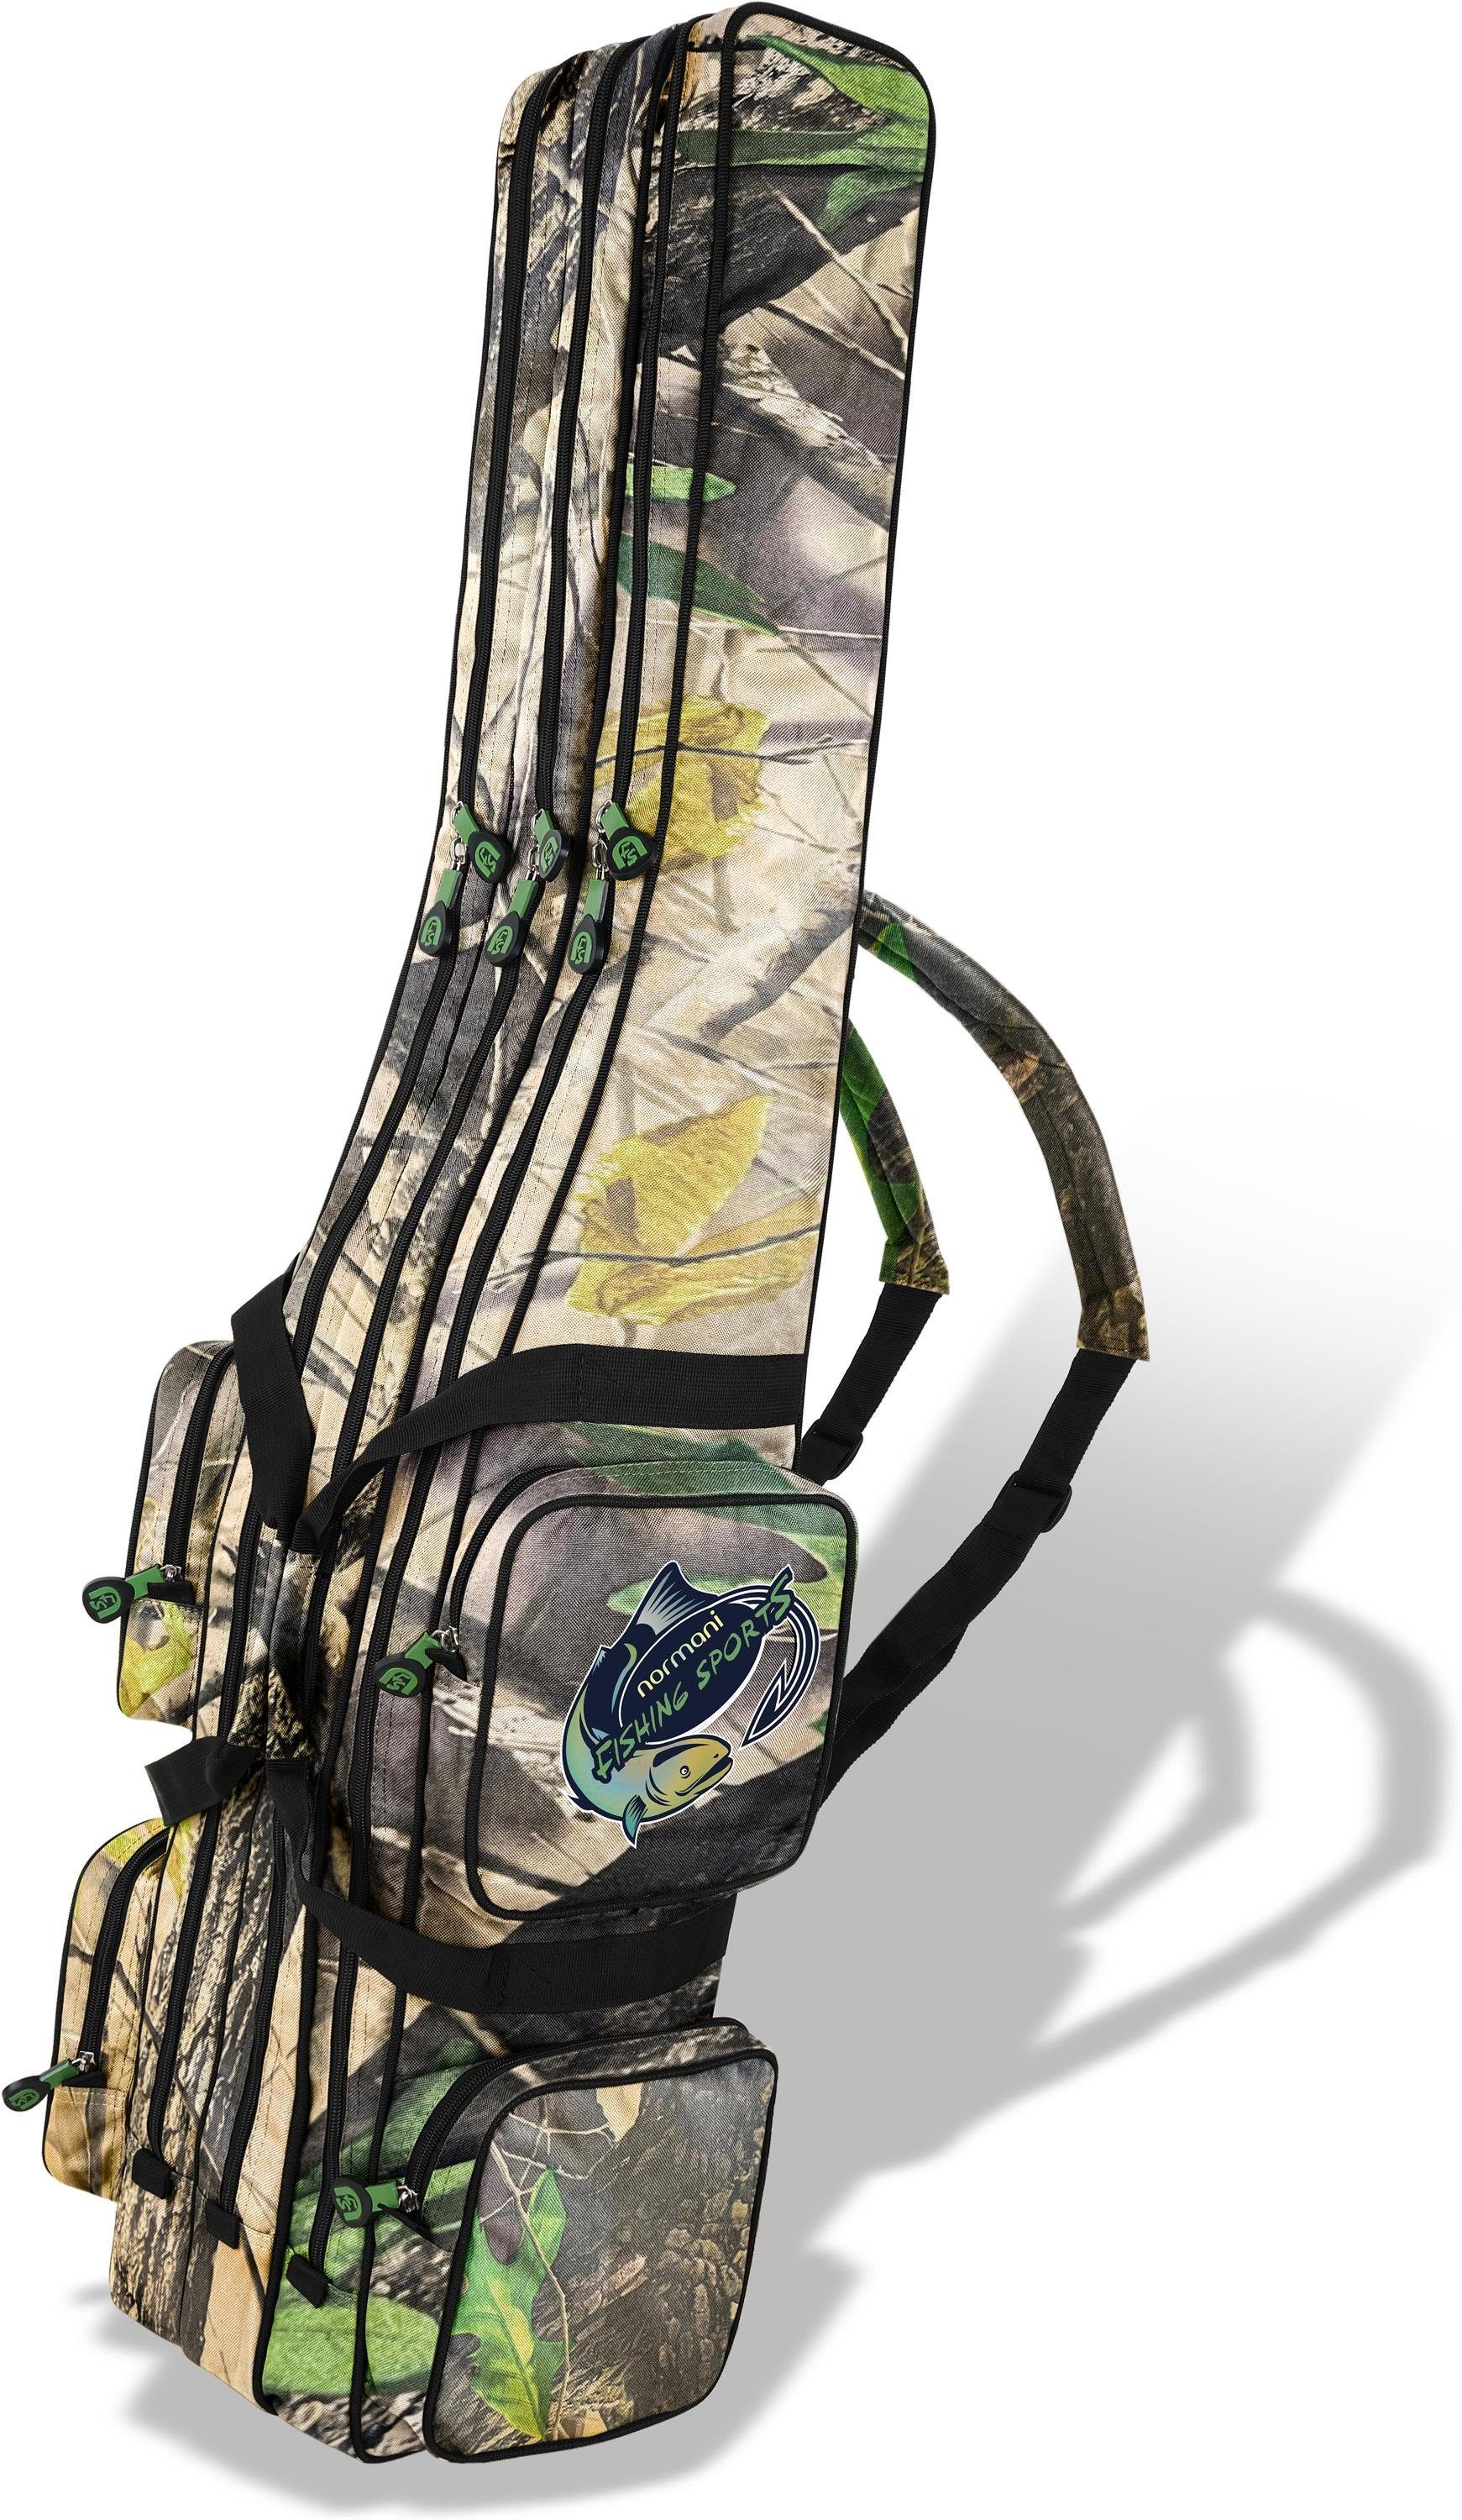 normani Angelrutentasche Rutentasche 1,25 m bis 2,10 m RodBox Triple, Rutenfutteral Anglertasche Rutenrucksack mit 3 Rutenfächern Green-Camo | Alle Damentaschen